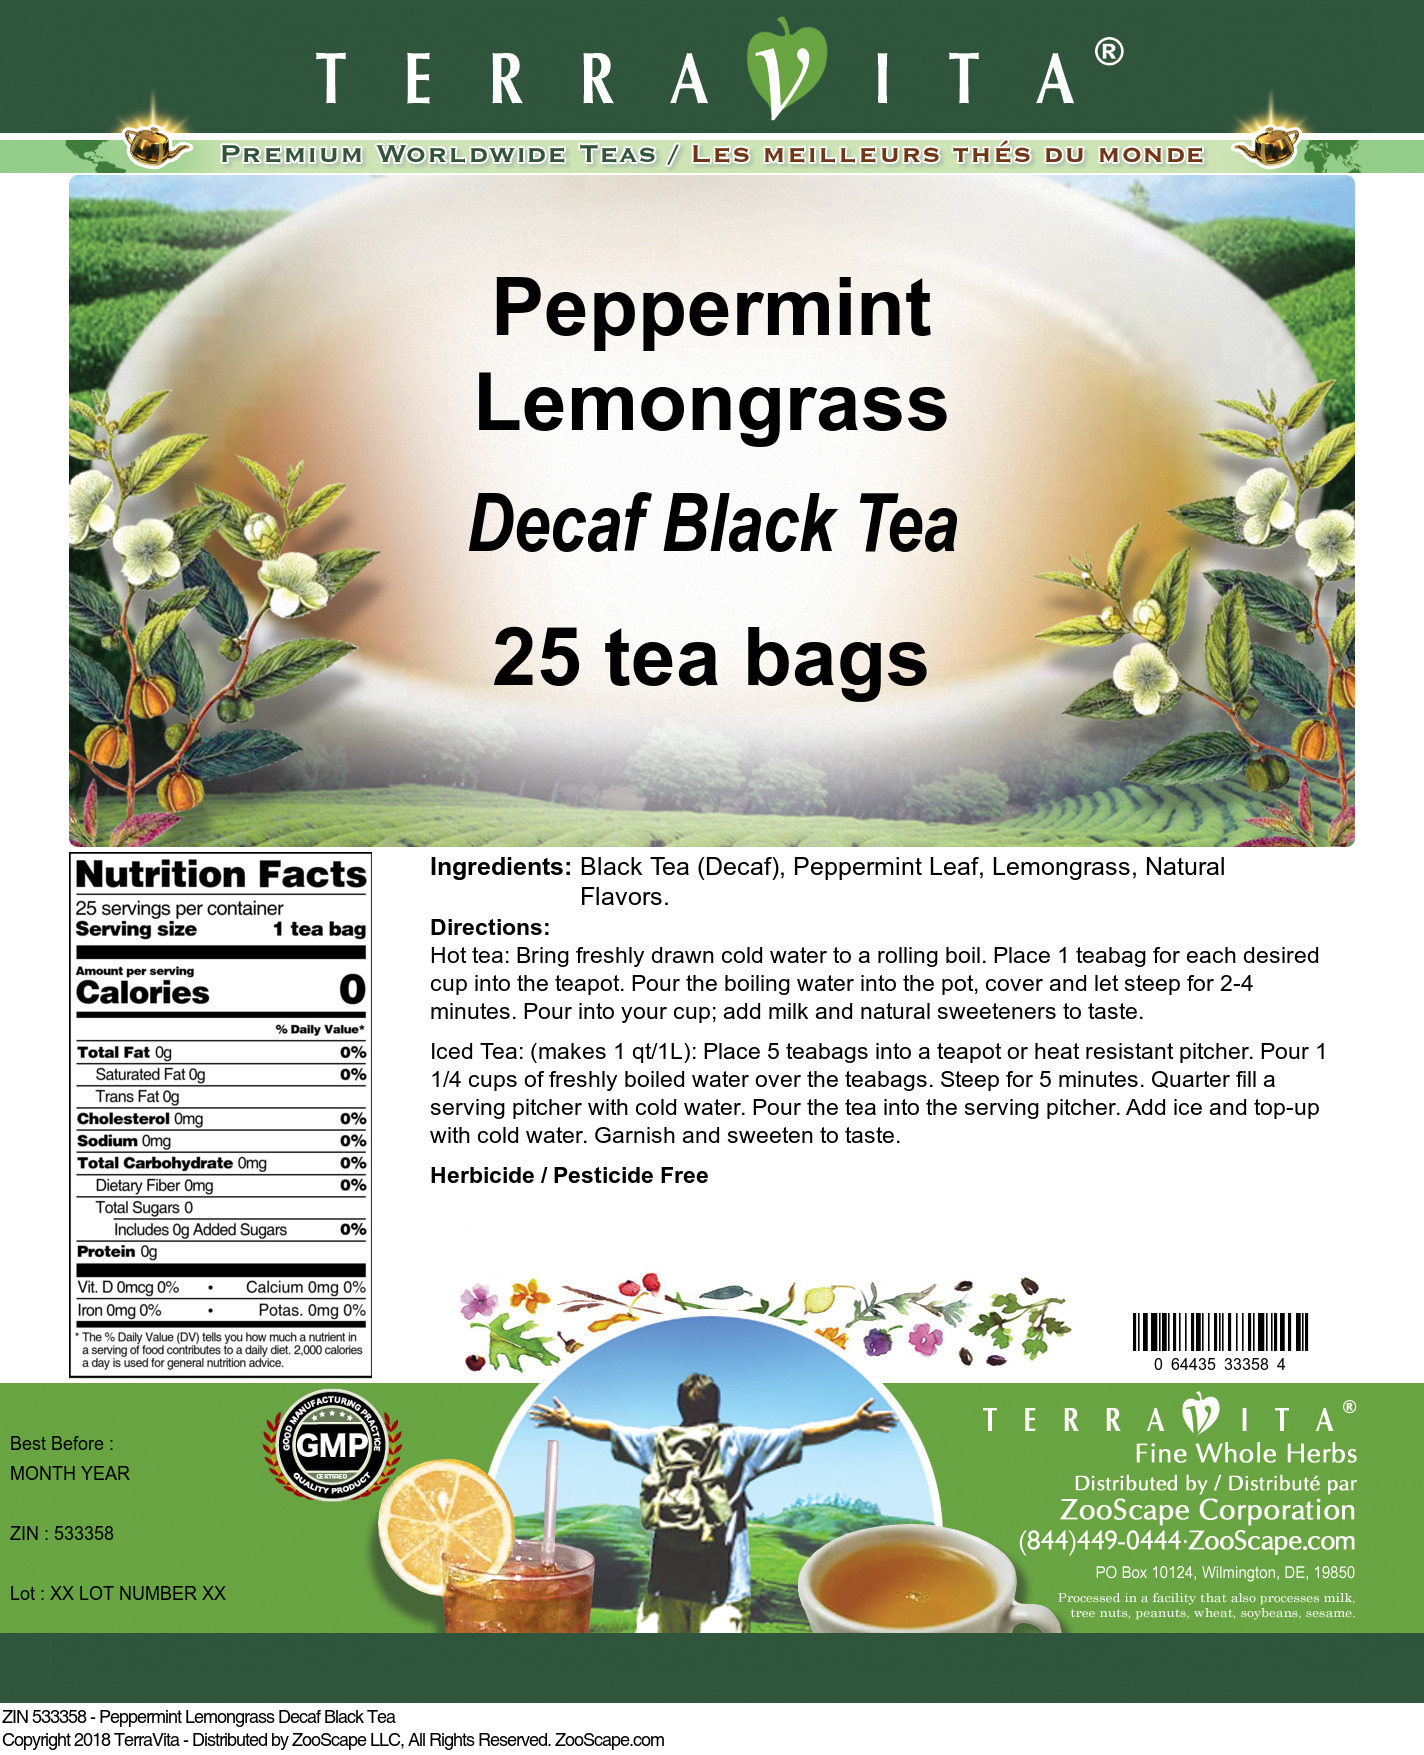 Peppermint Lemongrass Decaf Black Tea - Label